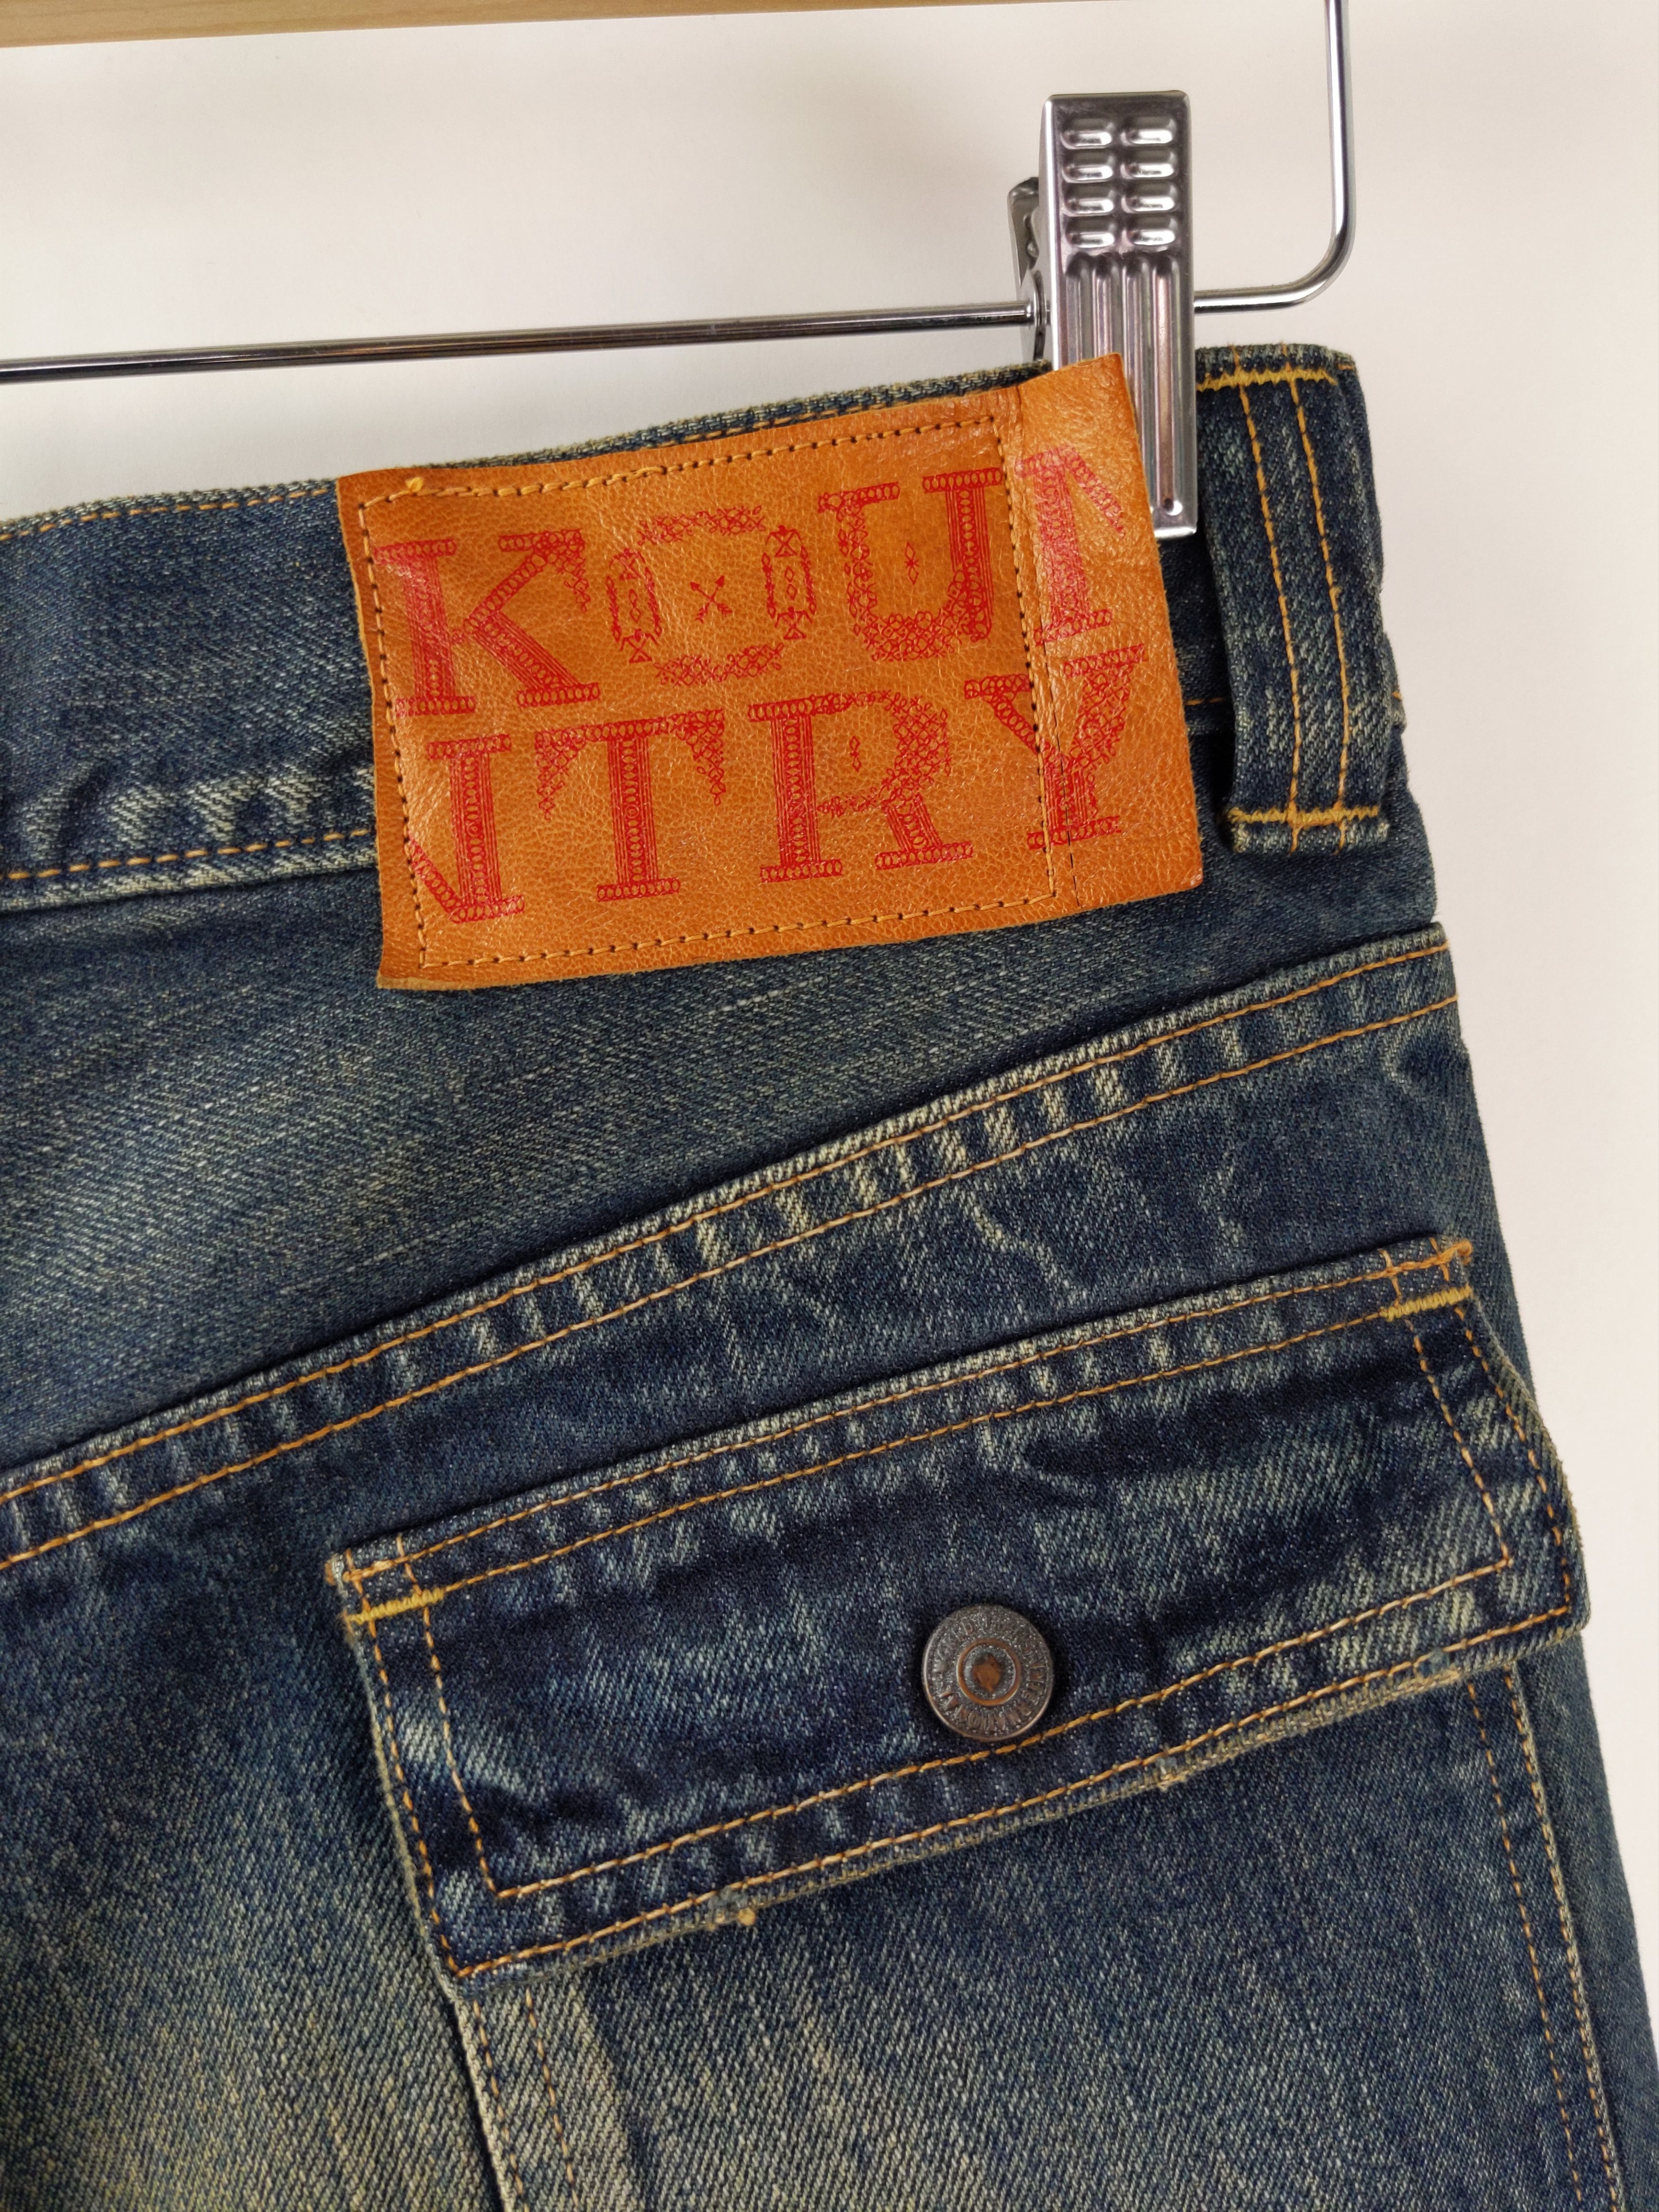 Kapital KAPITAL KOUNTRY Sashiko Boro Bush Pants Jeans Denim US S Size US 29 - 2 Preview